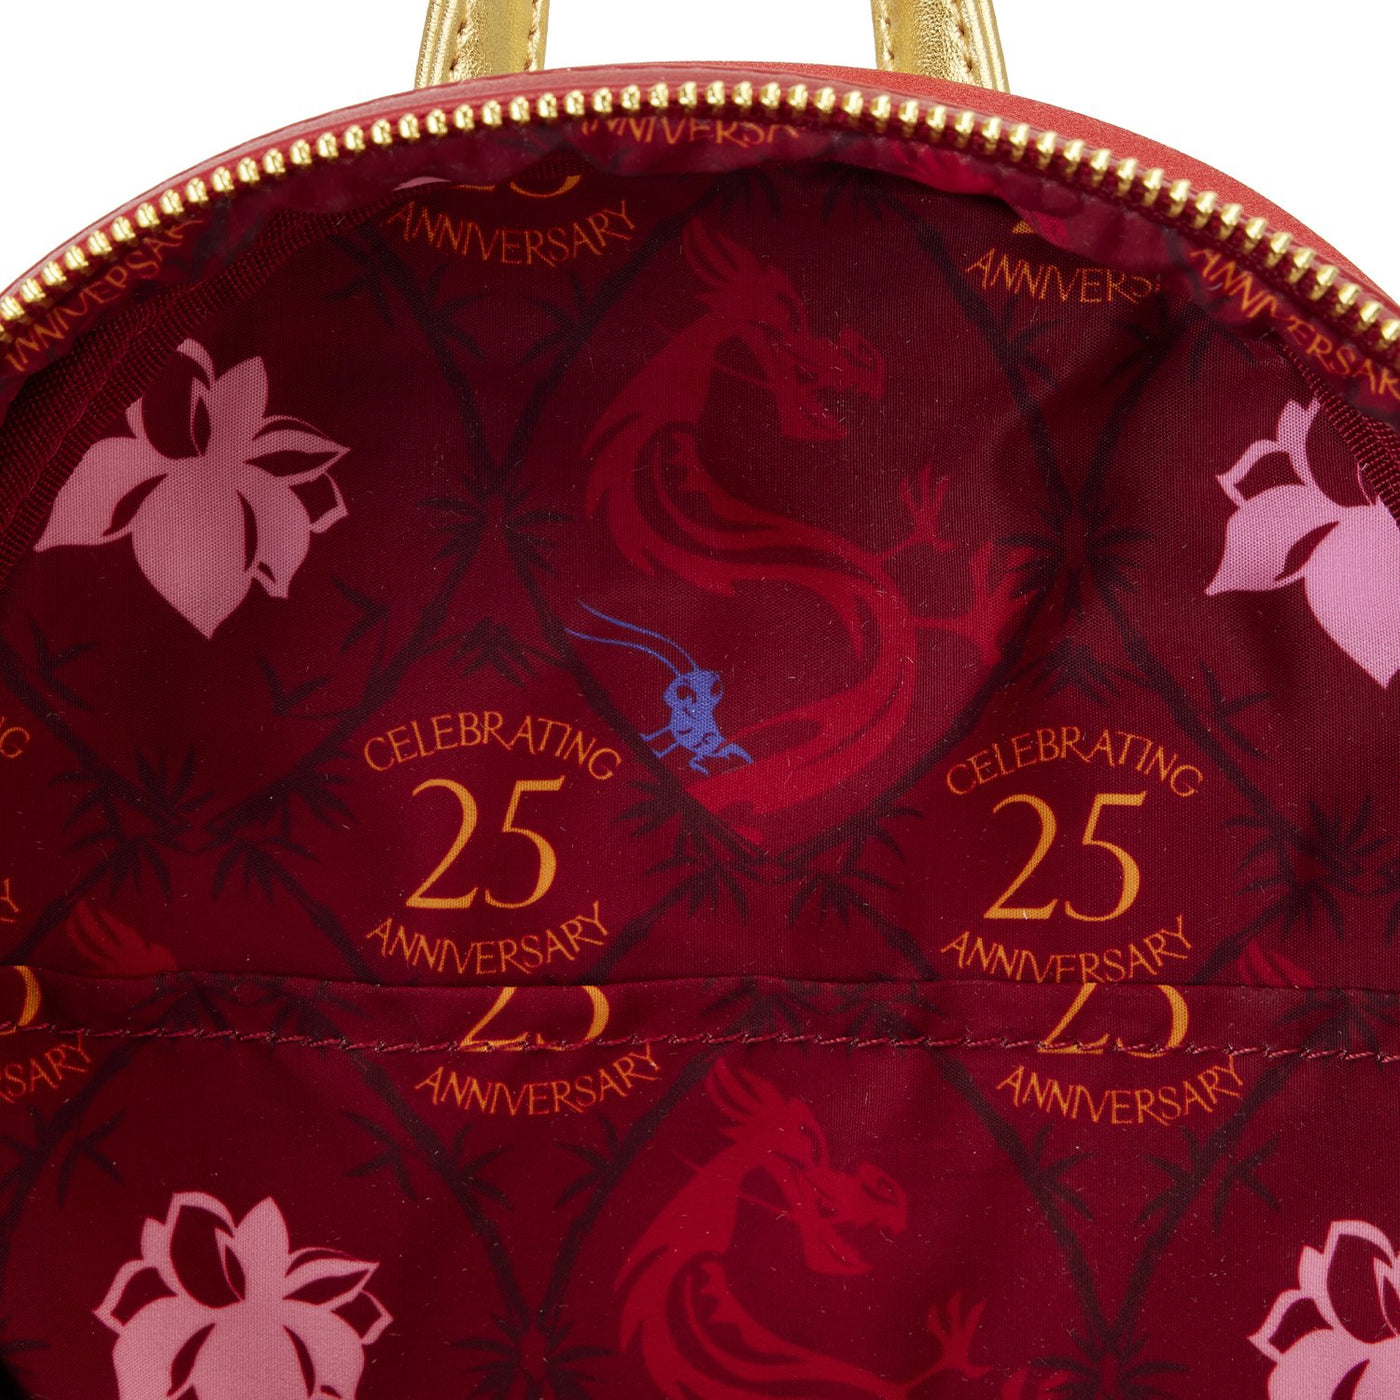 Disney Louis Vuitton Backpack, Disney Sac Dos Loungefly